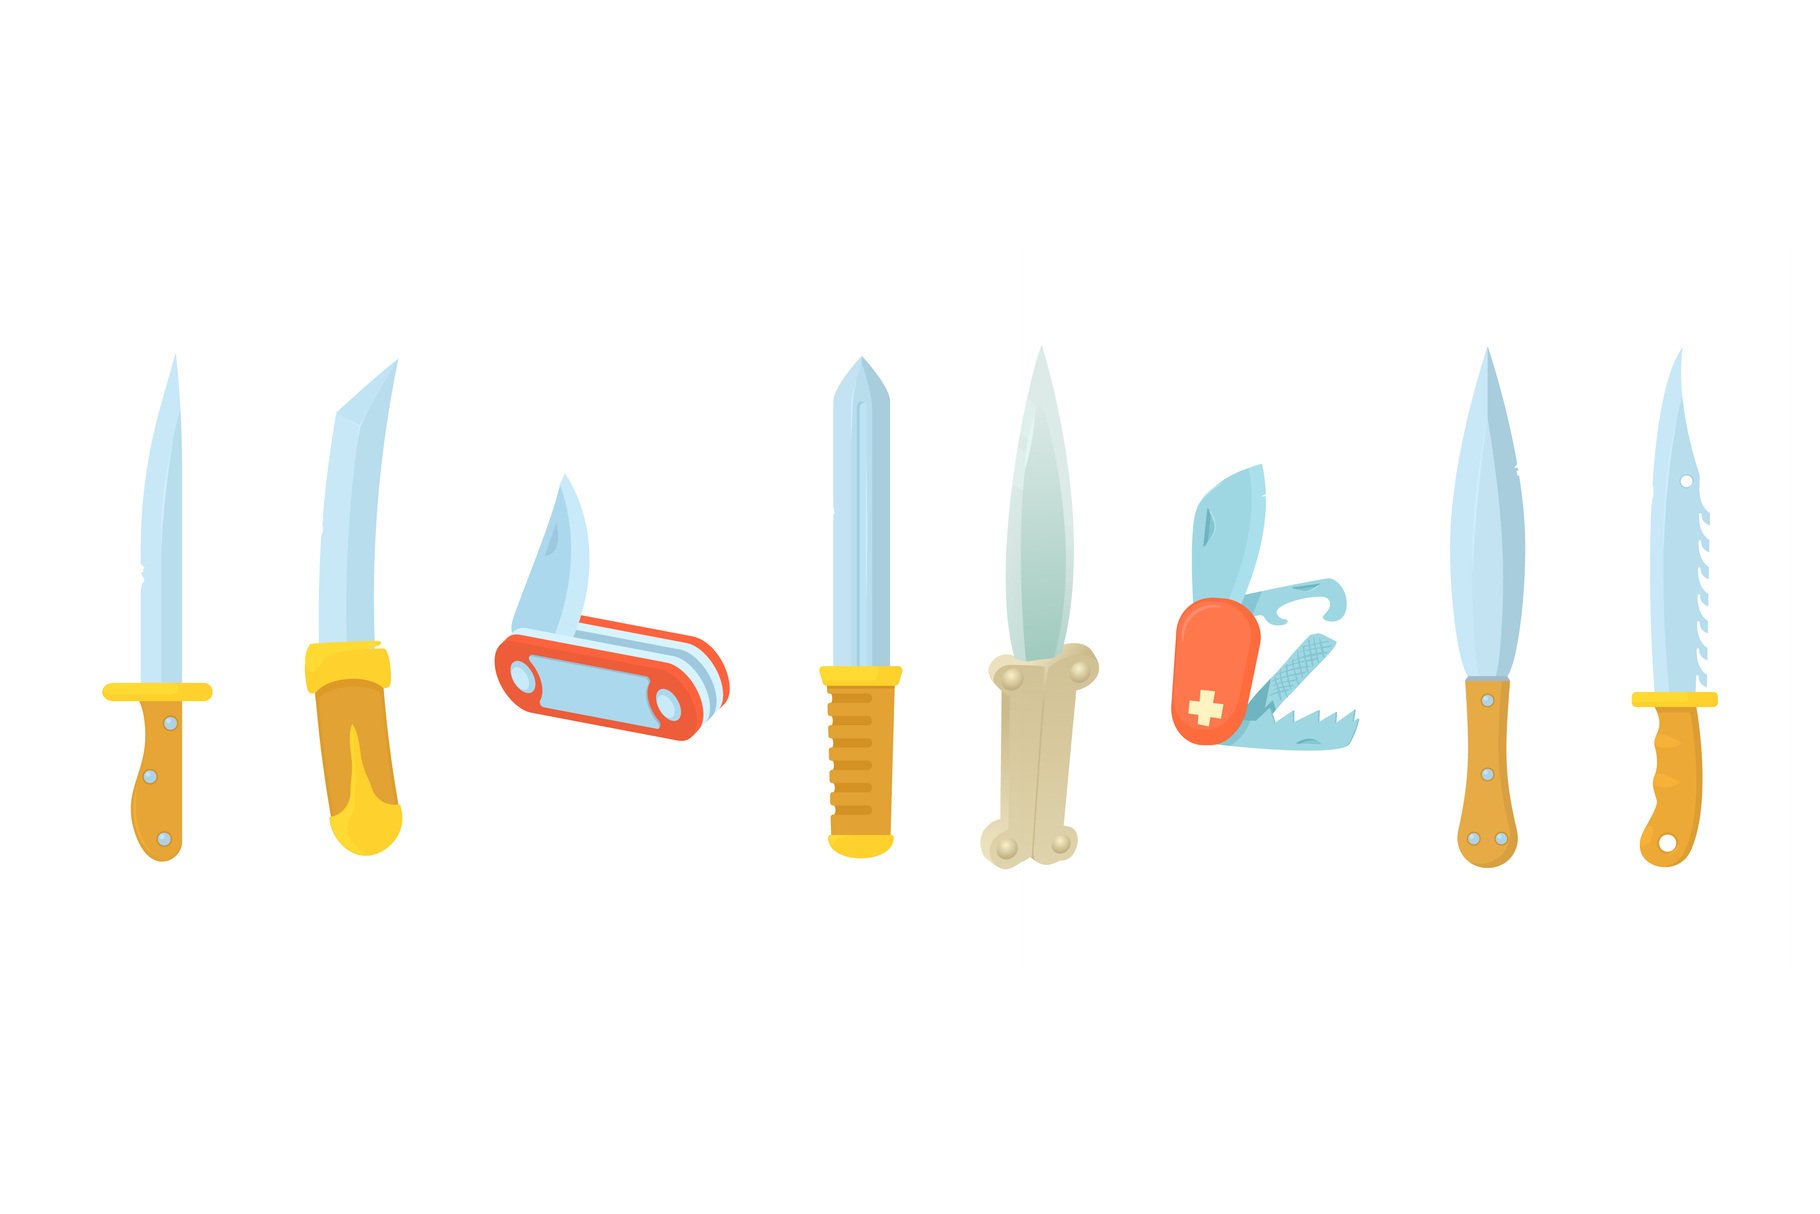 Knife icon set, cartoon style cover image.